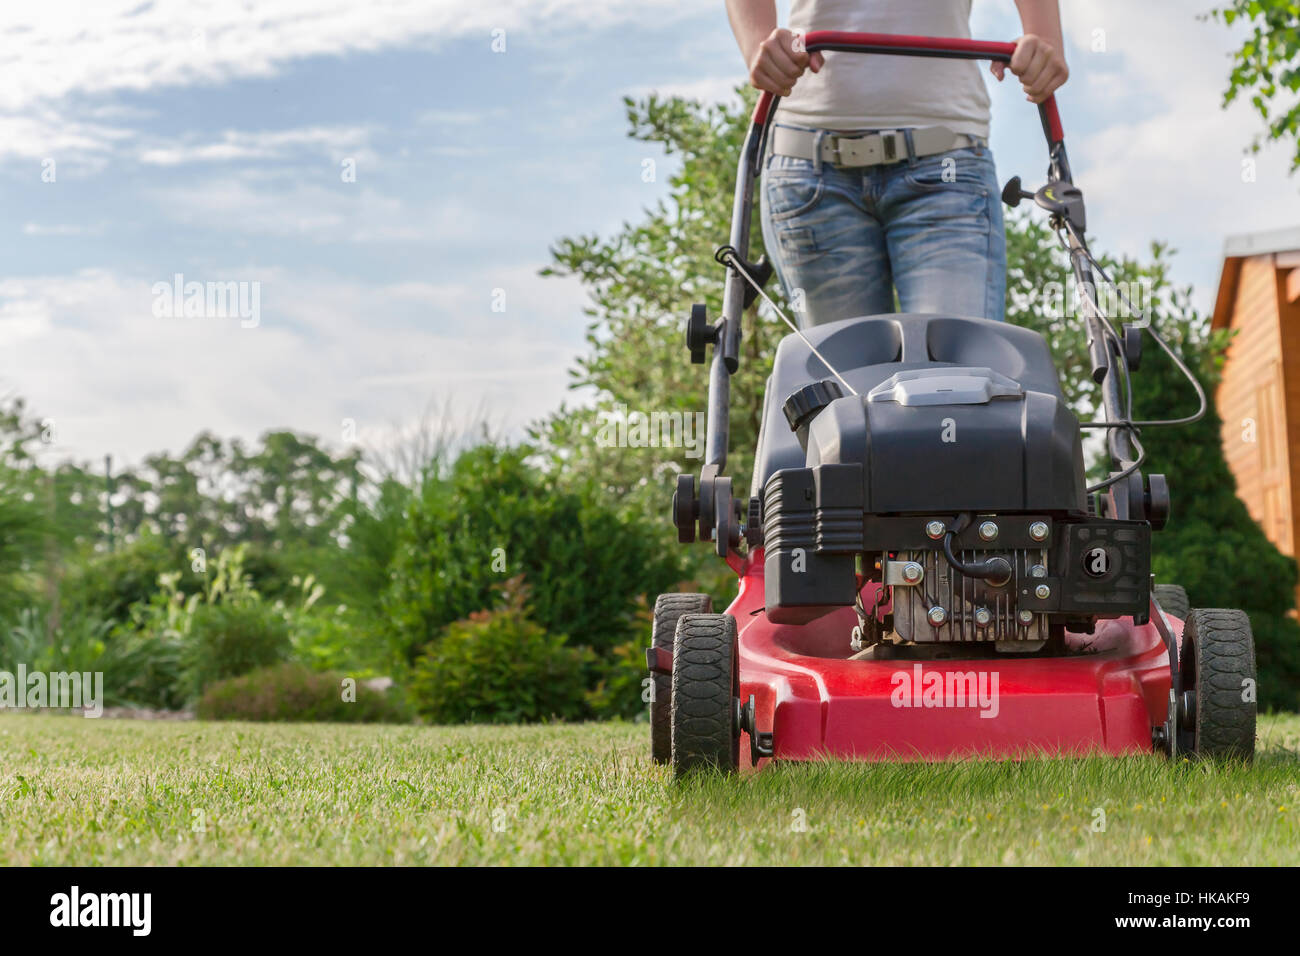 Anonyme Frau Mähen des Rasens mit einem motorisierten Rasenmäher Stockfoto